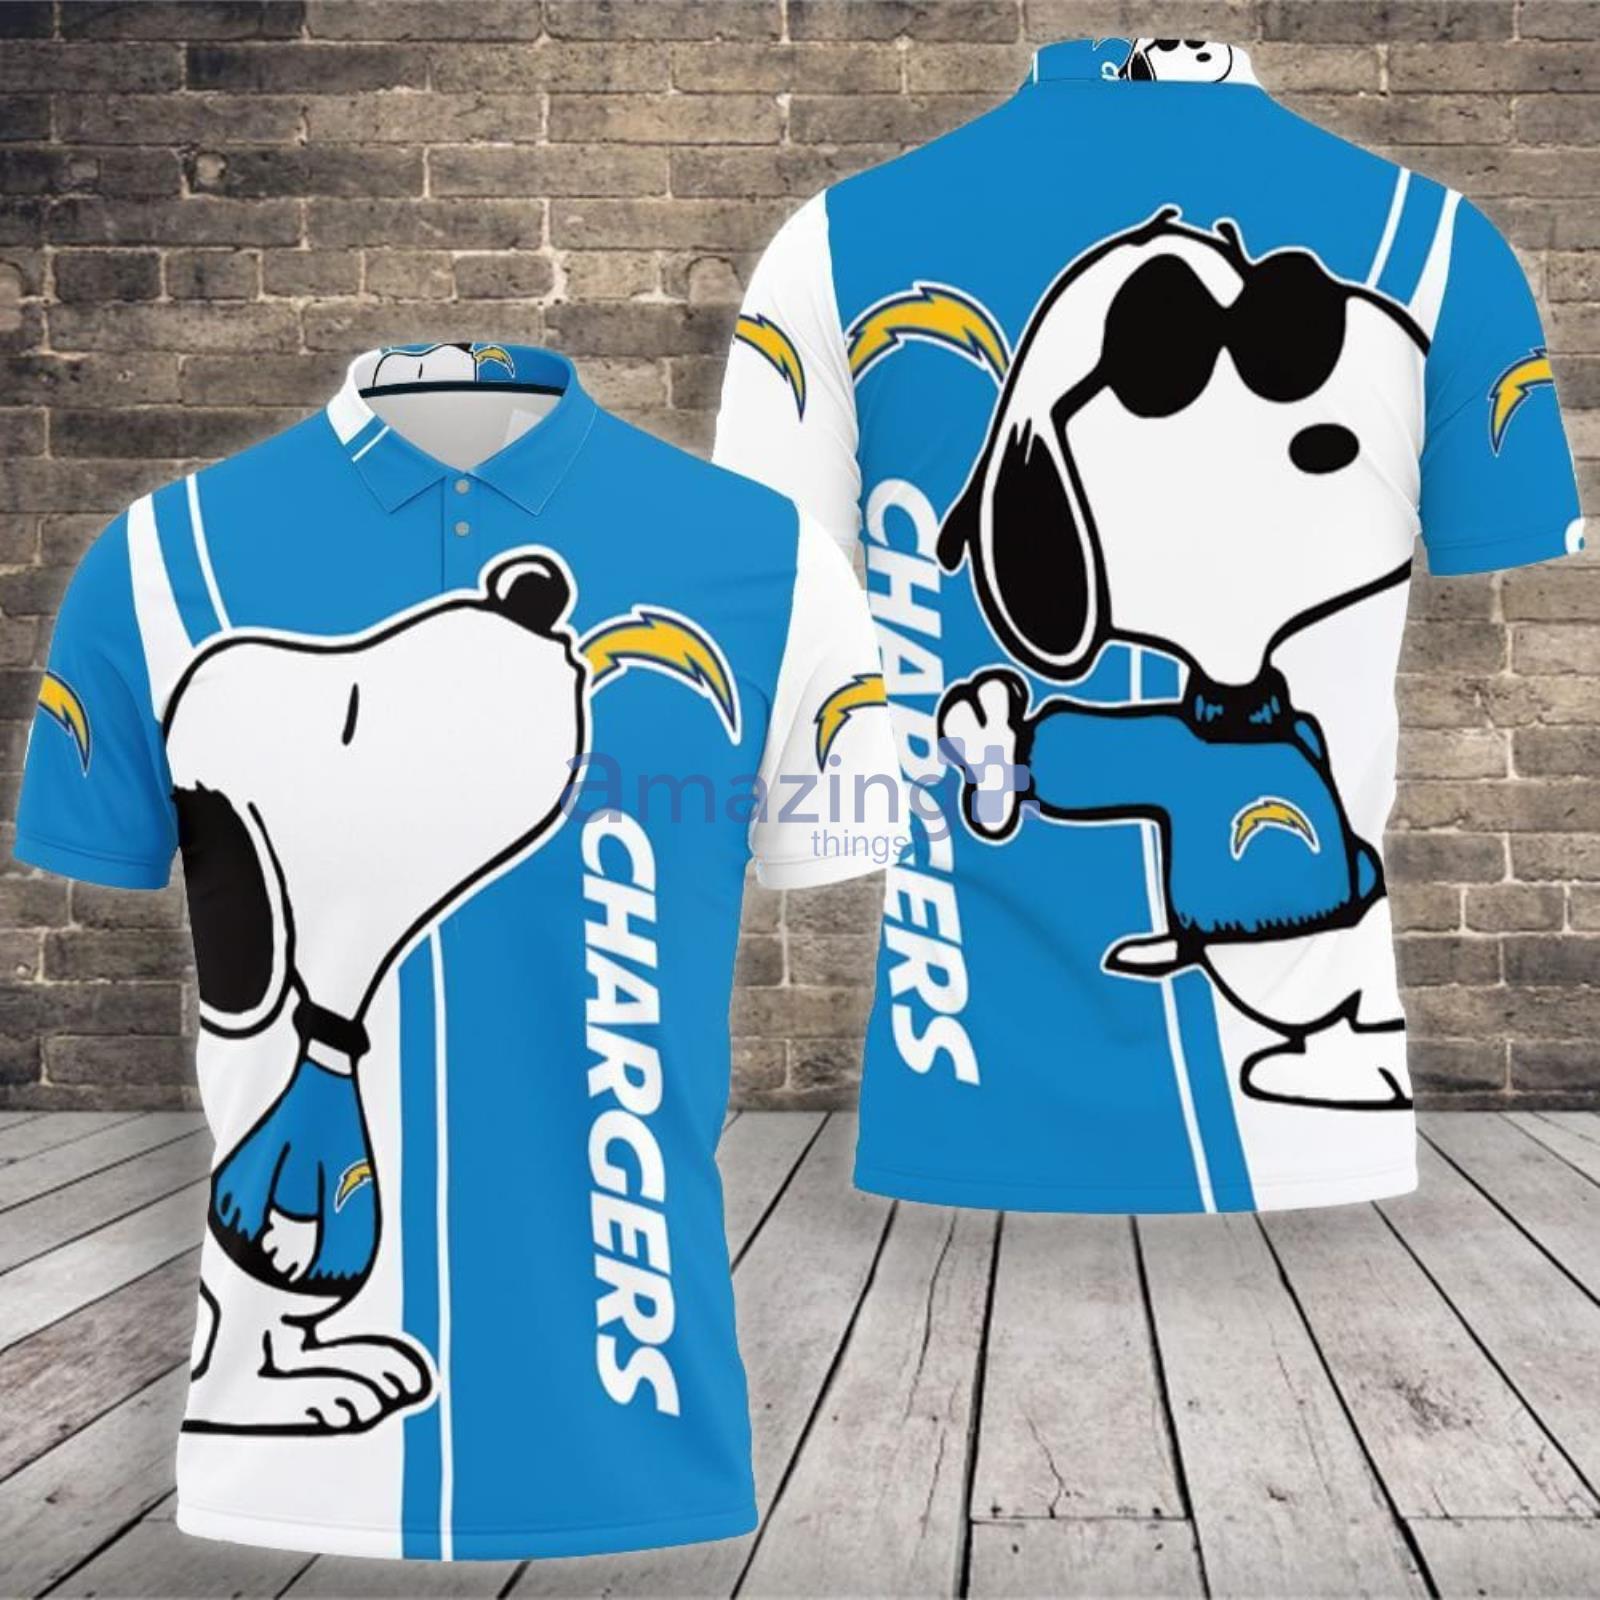 Los Angeles Rams Snoopy Lover Printed Polo Shirts - Peto Rugs